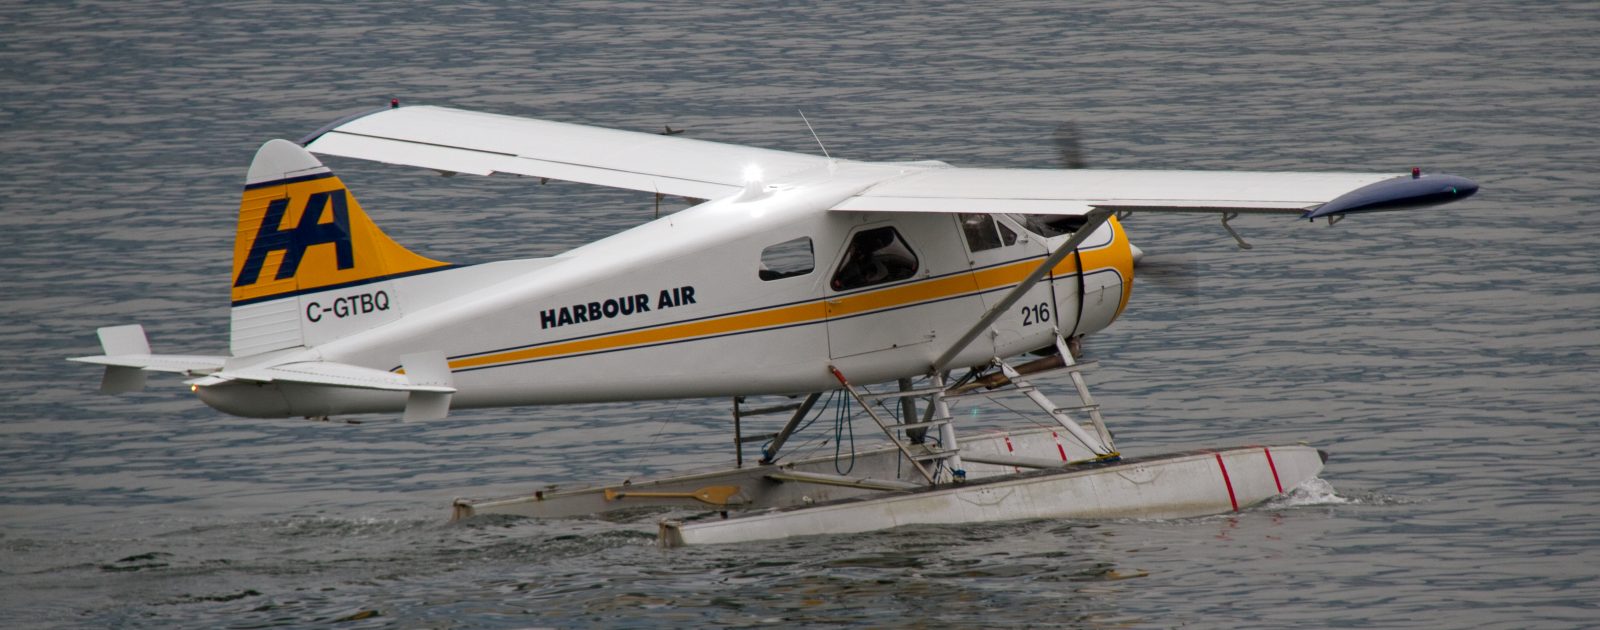 de Havilland Canada DHC-2 Beaver: Civilian STOL (Short Take-Off landing) Utility Transport Aircraft